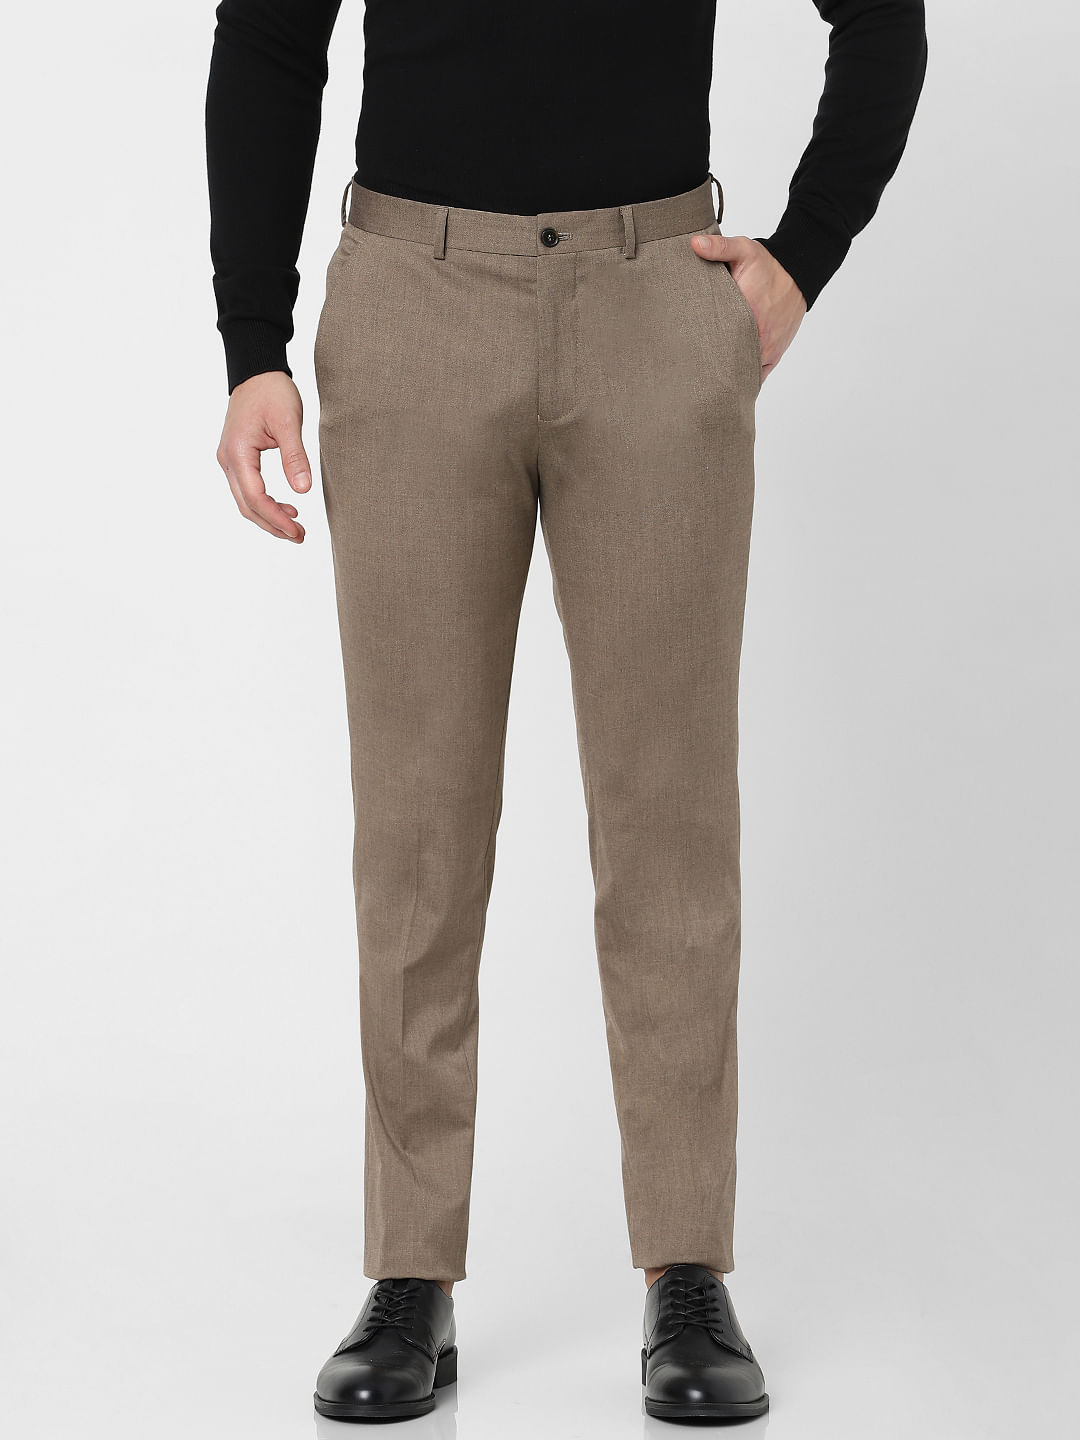 Reiss Gabi Slim Fit Suit Trousers | REISS USA